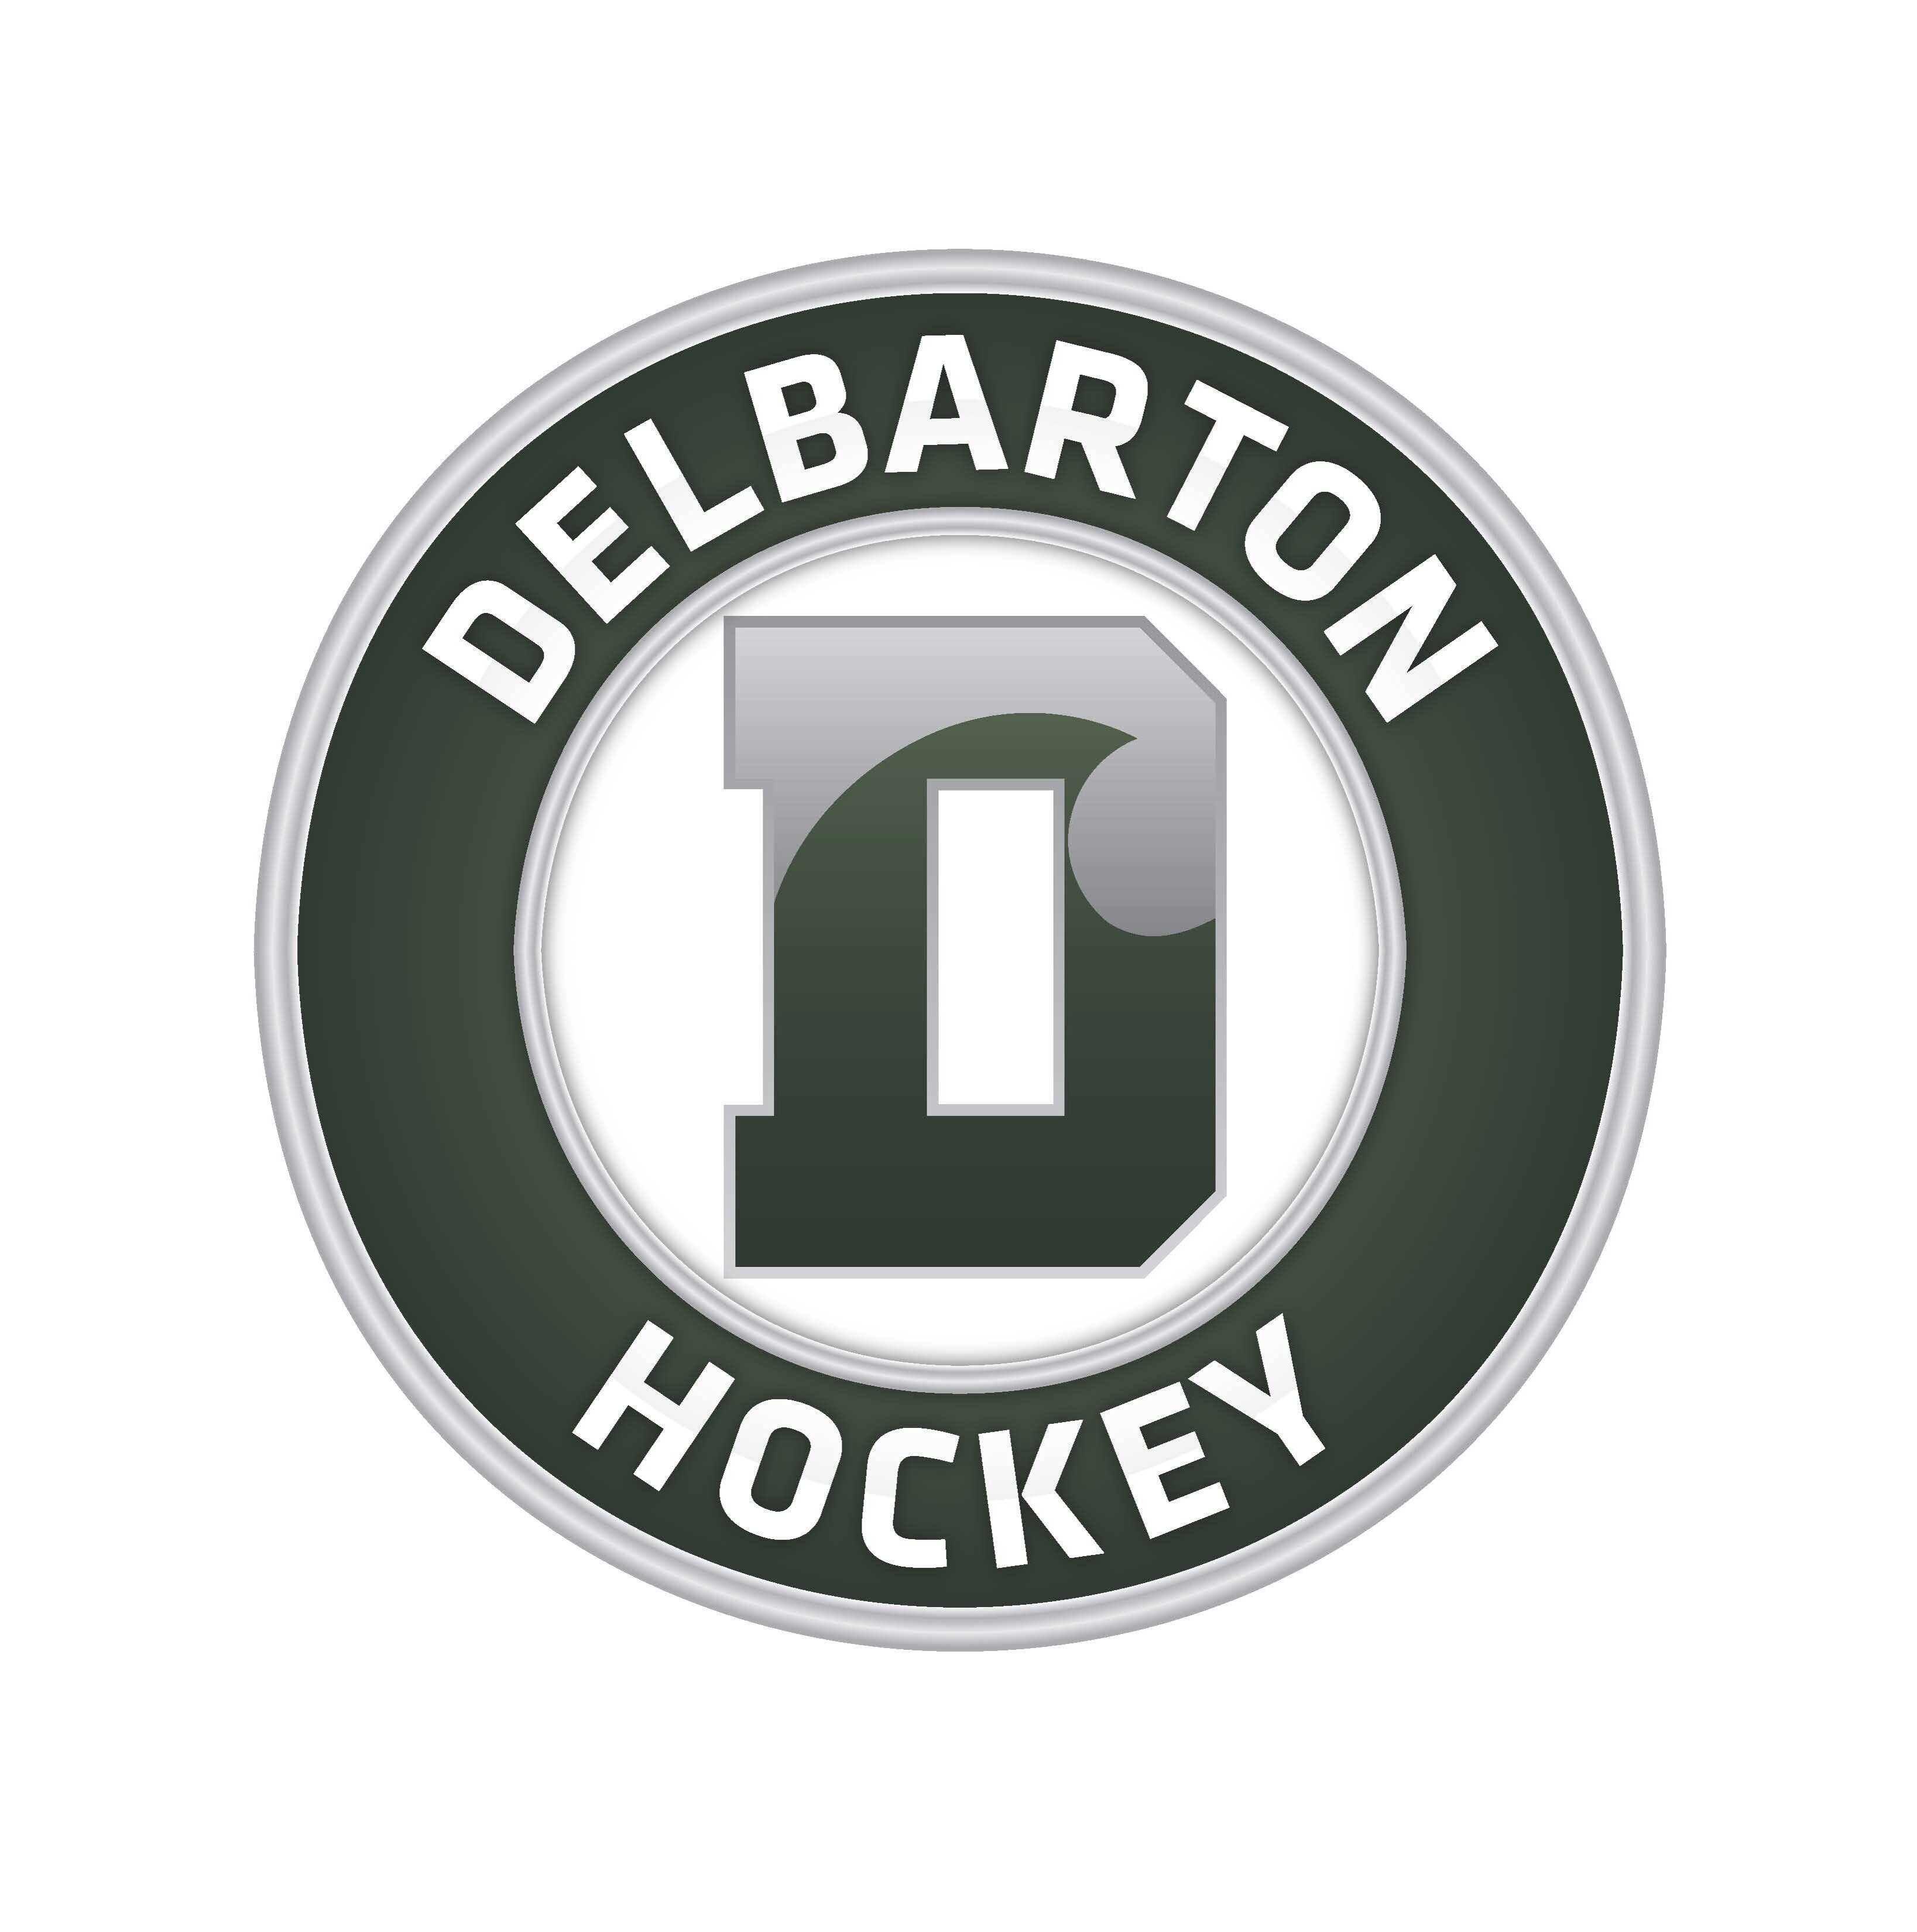 Official Twitter Account of Delbarton School Hockey '89, '92, '02, '06, '08, '09, '10, '11, '12, '13, '16, '17, '18, NJ State Champions